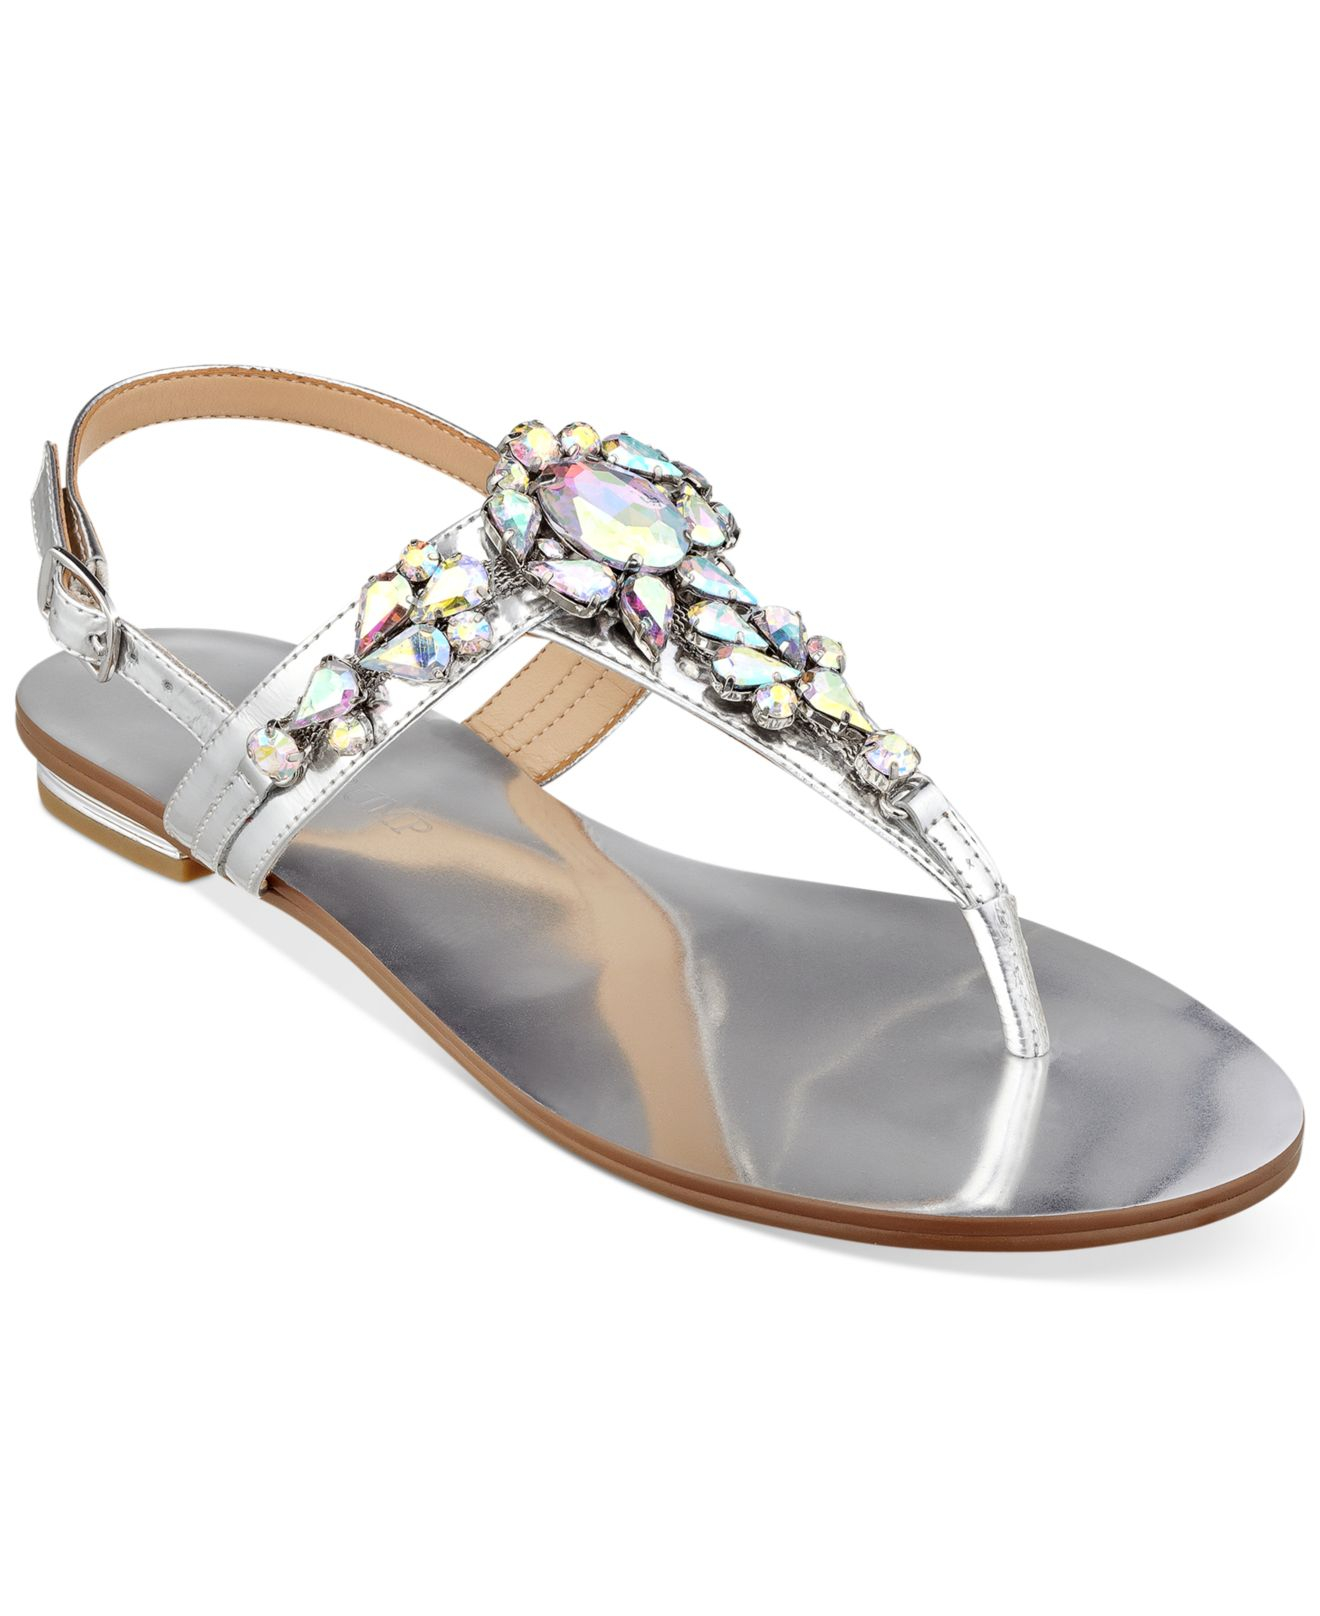 Lyst - Ivanka Trump Felix Jeweled Thong Sandals in Metallic